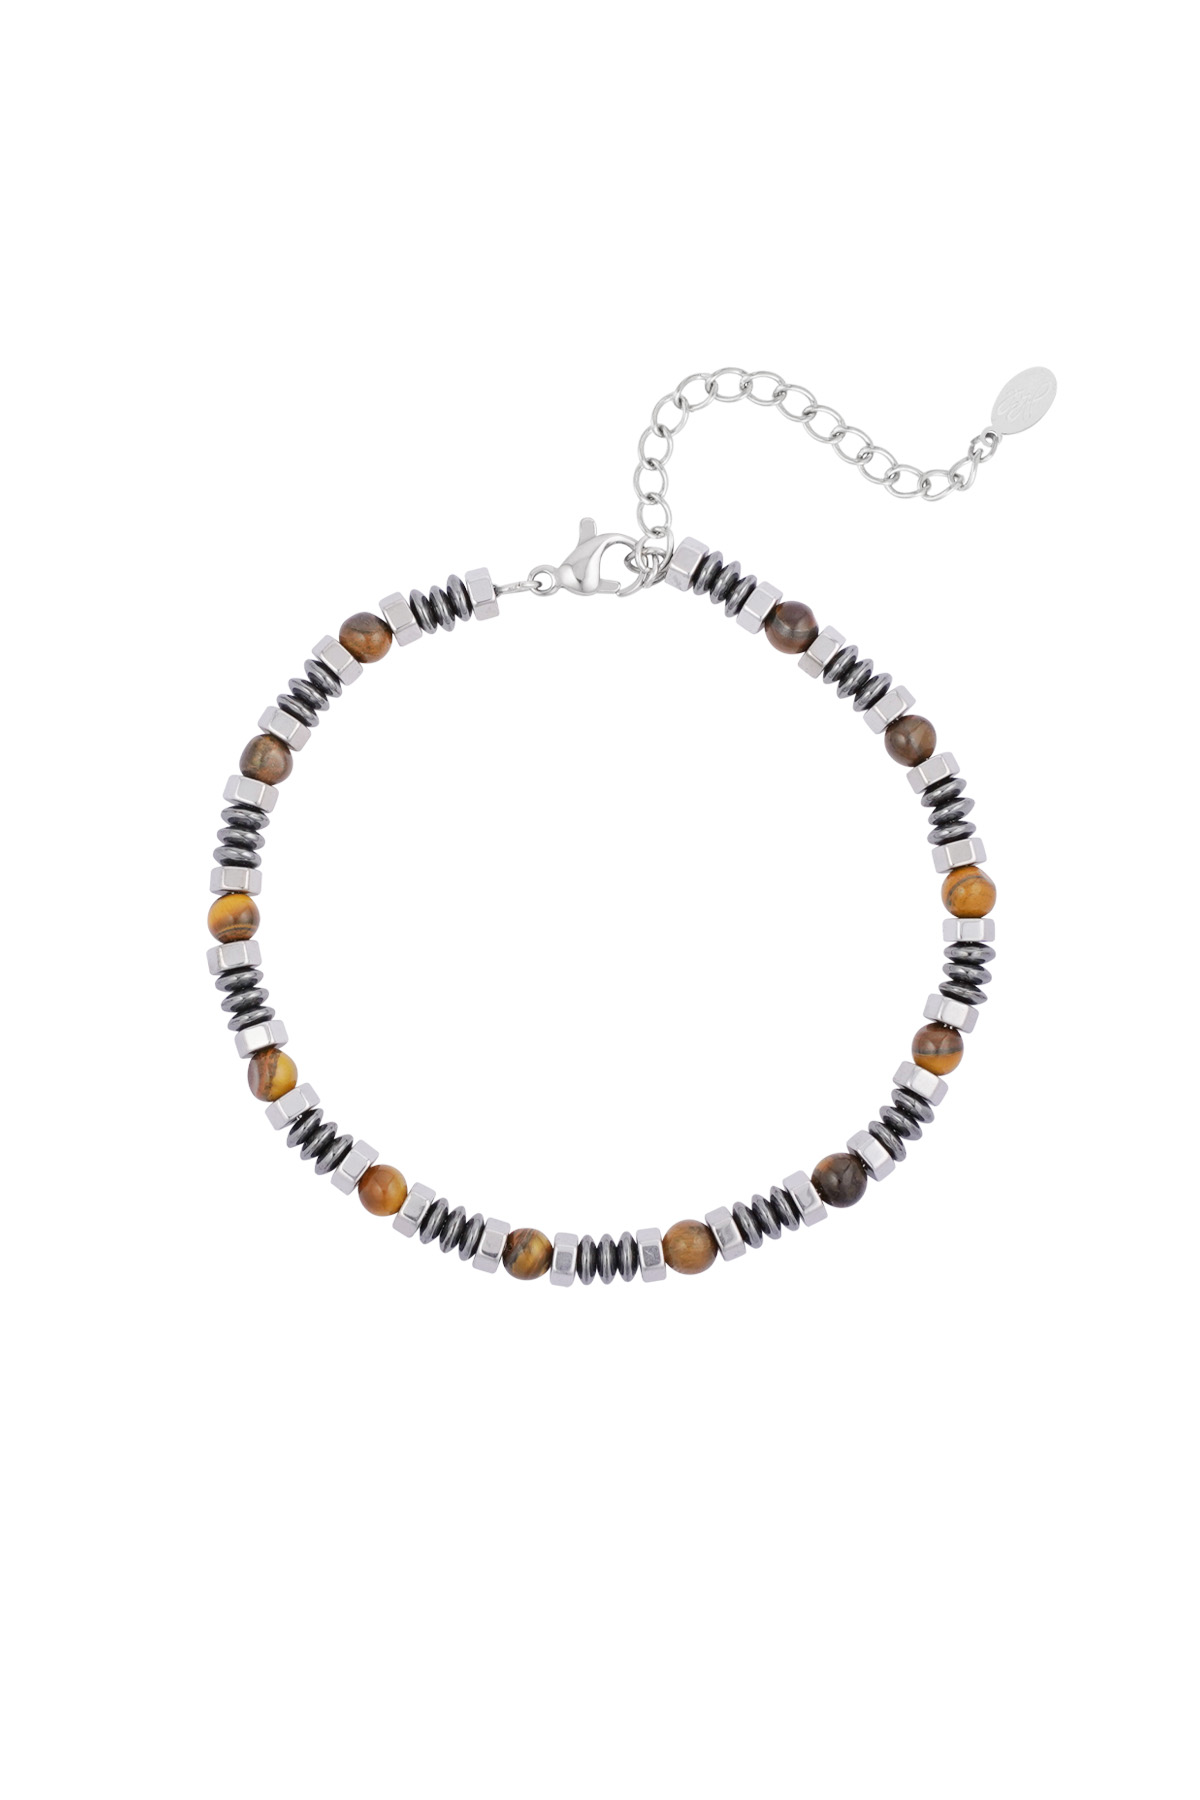 Simple men's bracelet with beads - brown